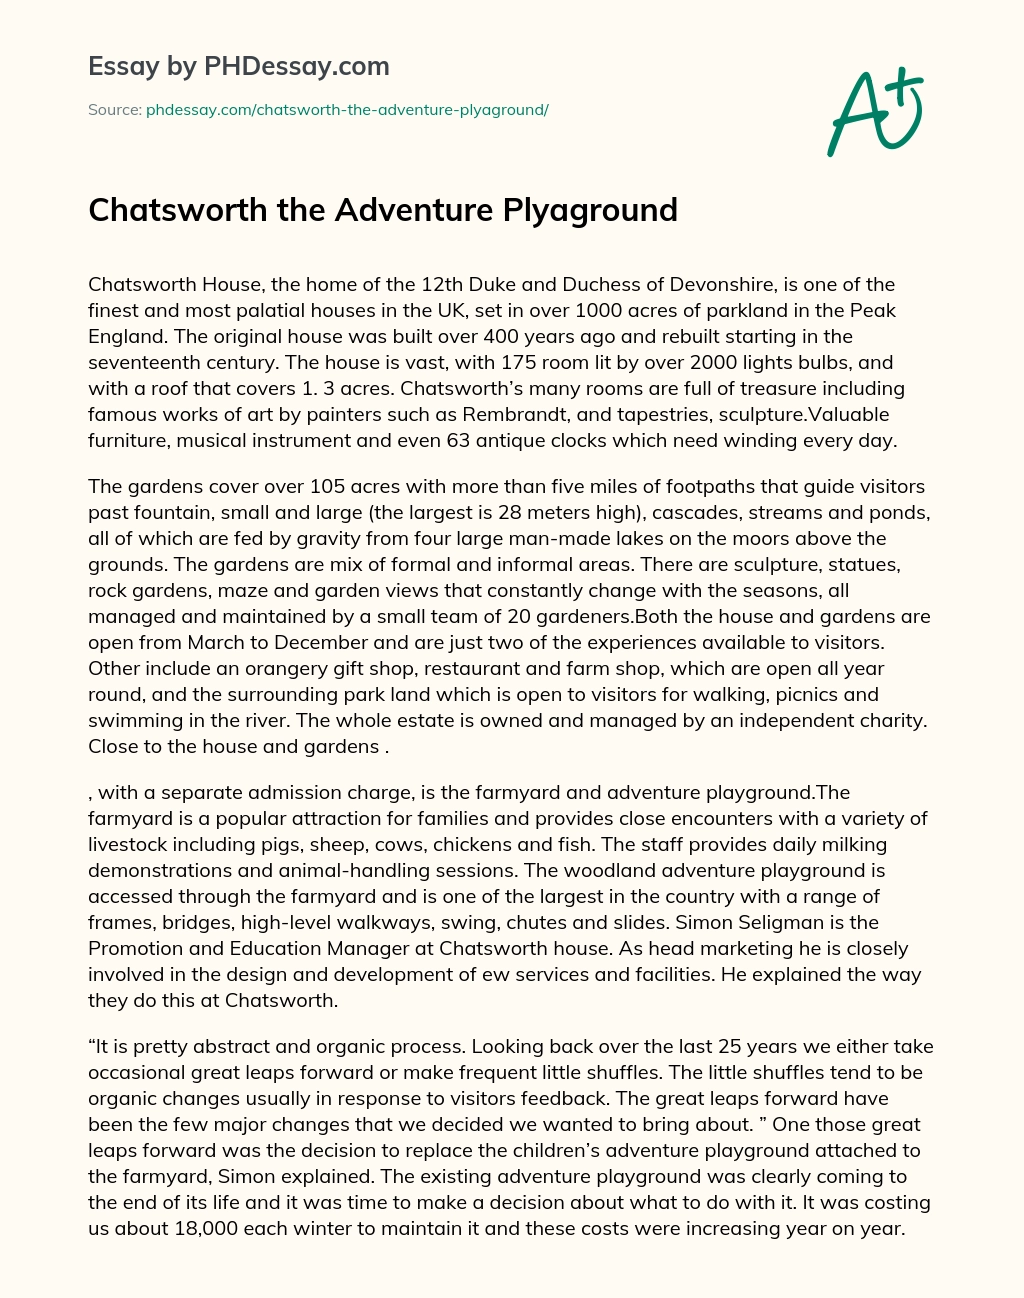 Chatsworth the adventure playground essay